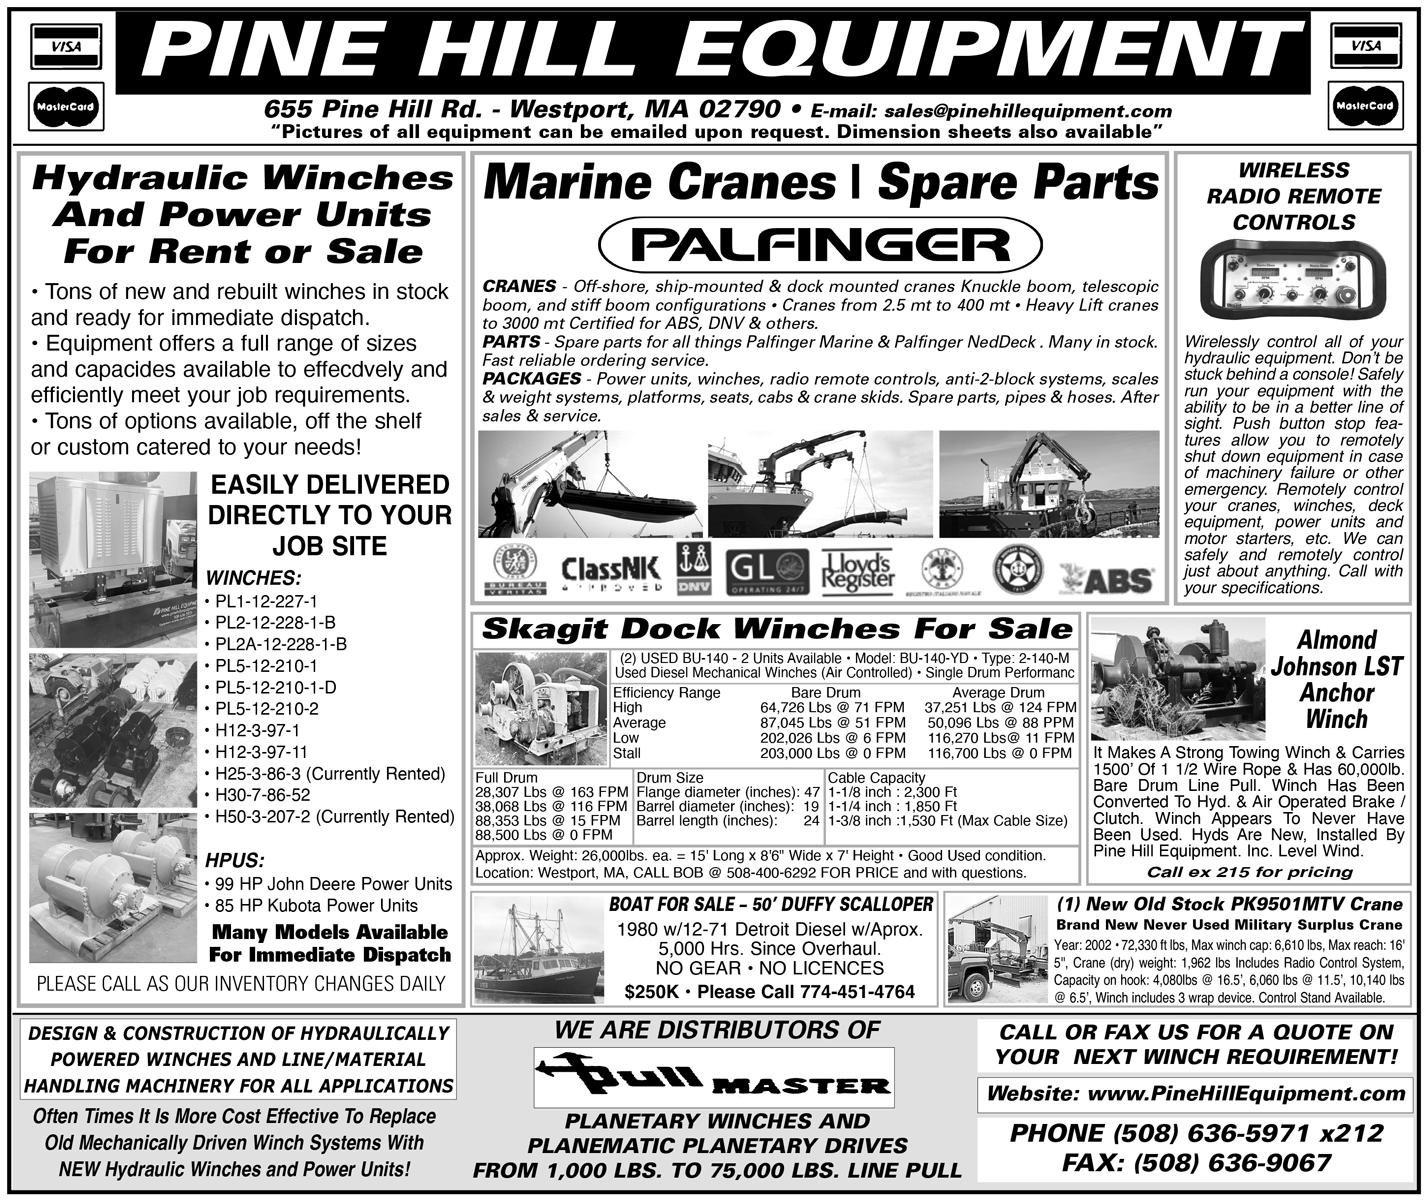 PINE-HILL-EQUIPMENT-6124.gif